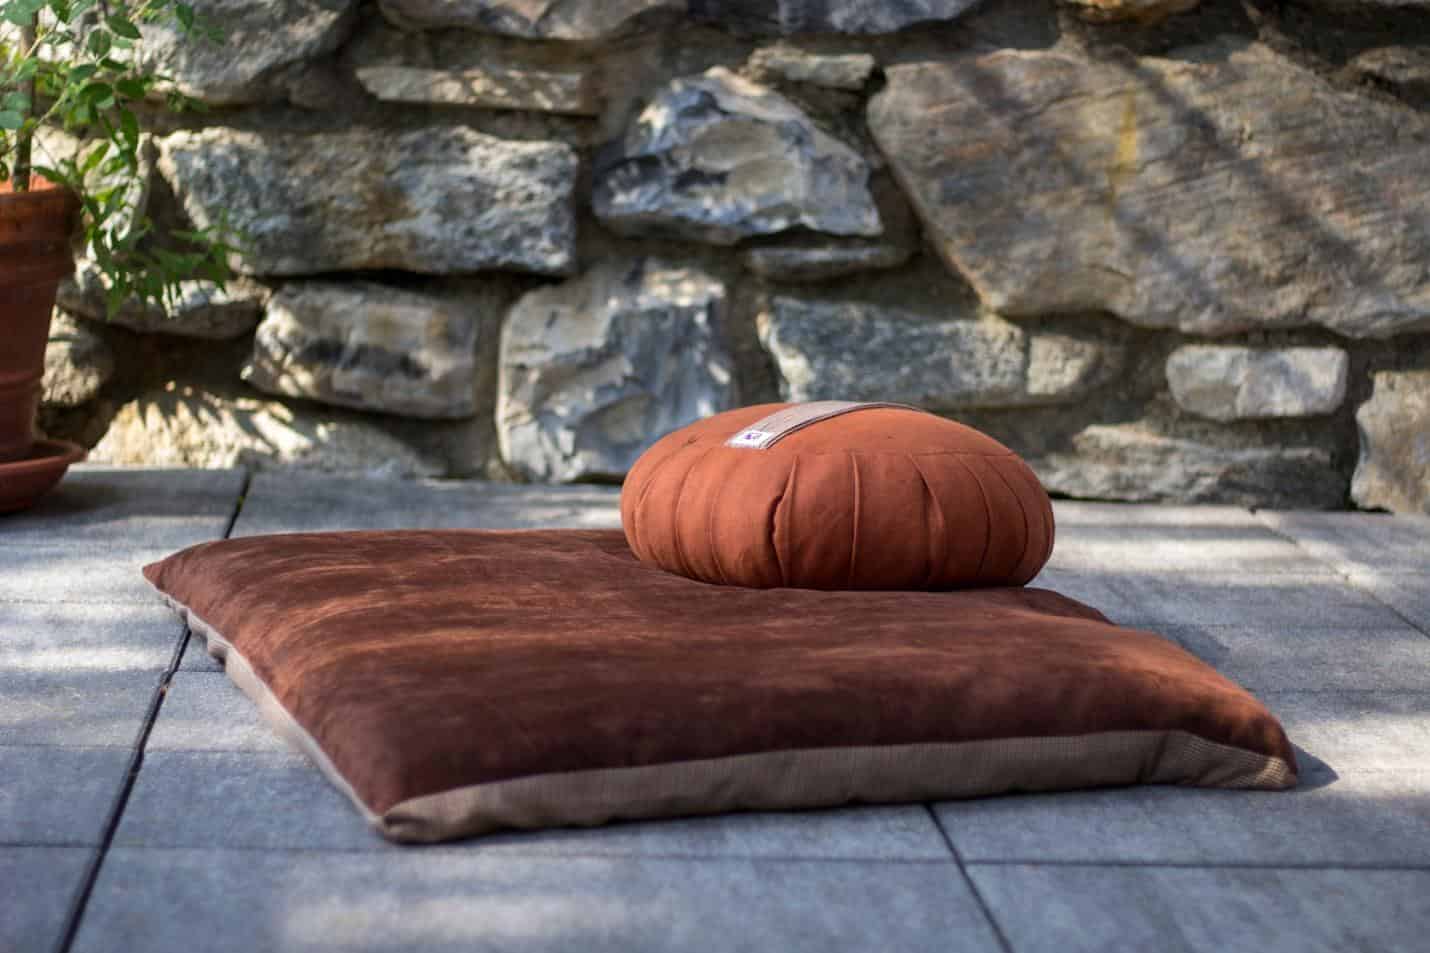 Do you need a meditation cushion